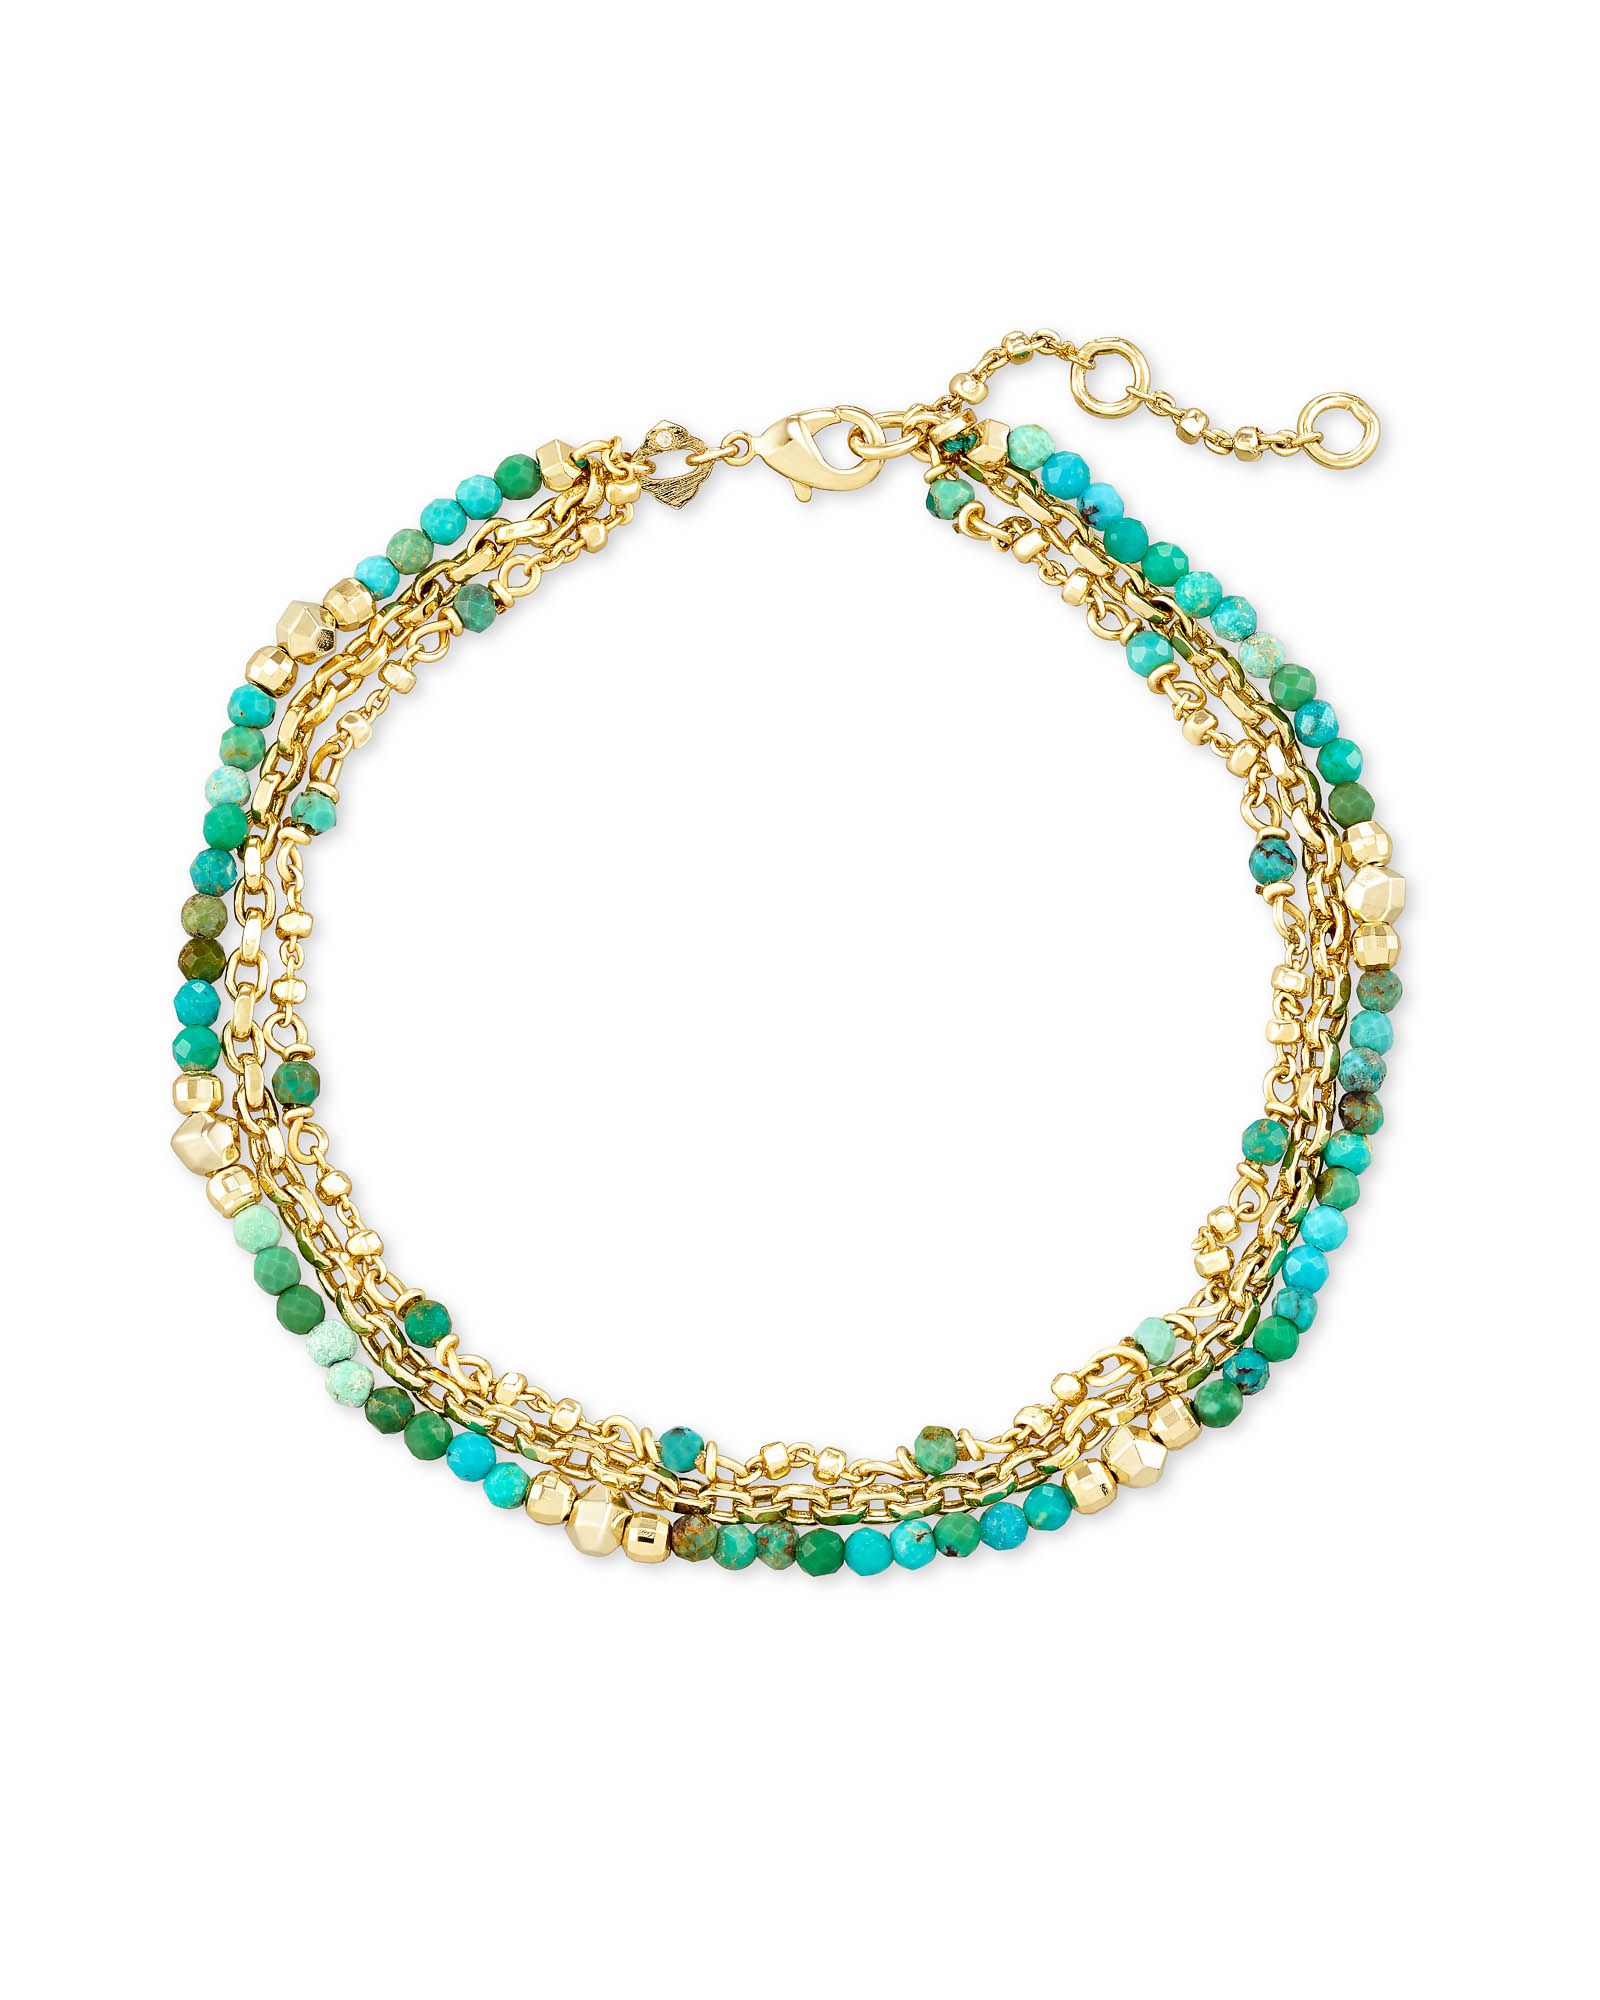 Scarlet Gold Chain Bracelet in Turquoise | Kendra Scott